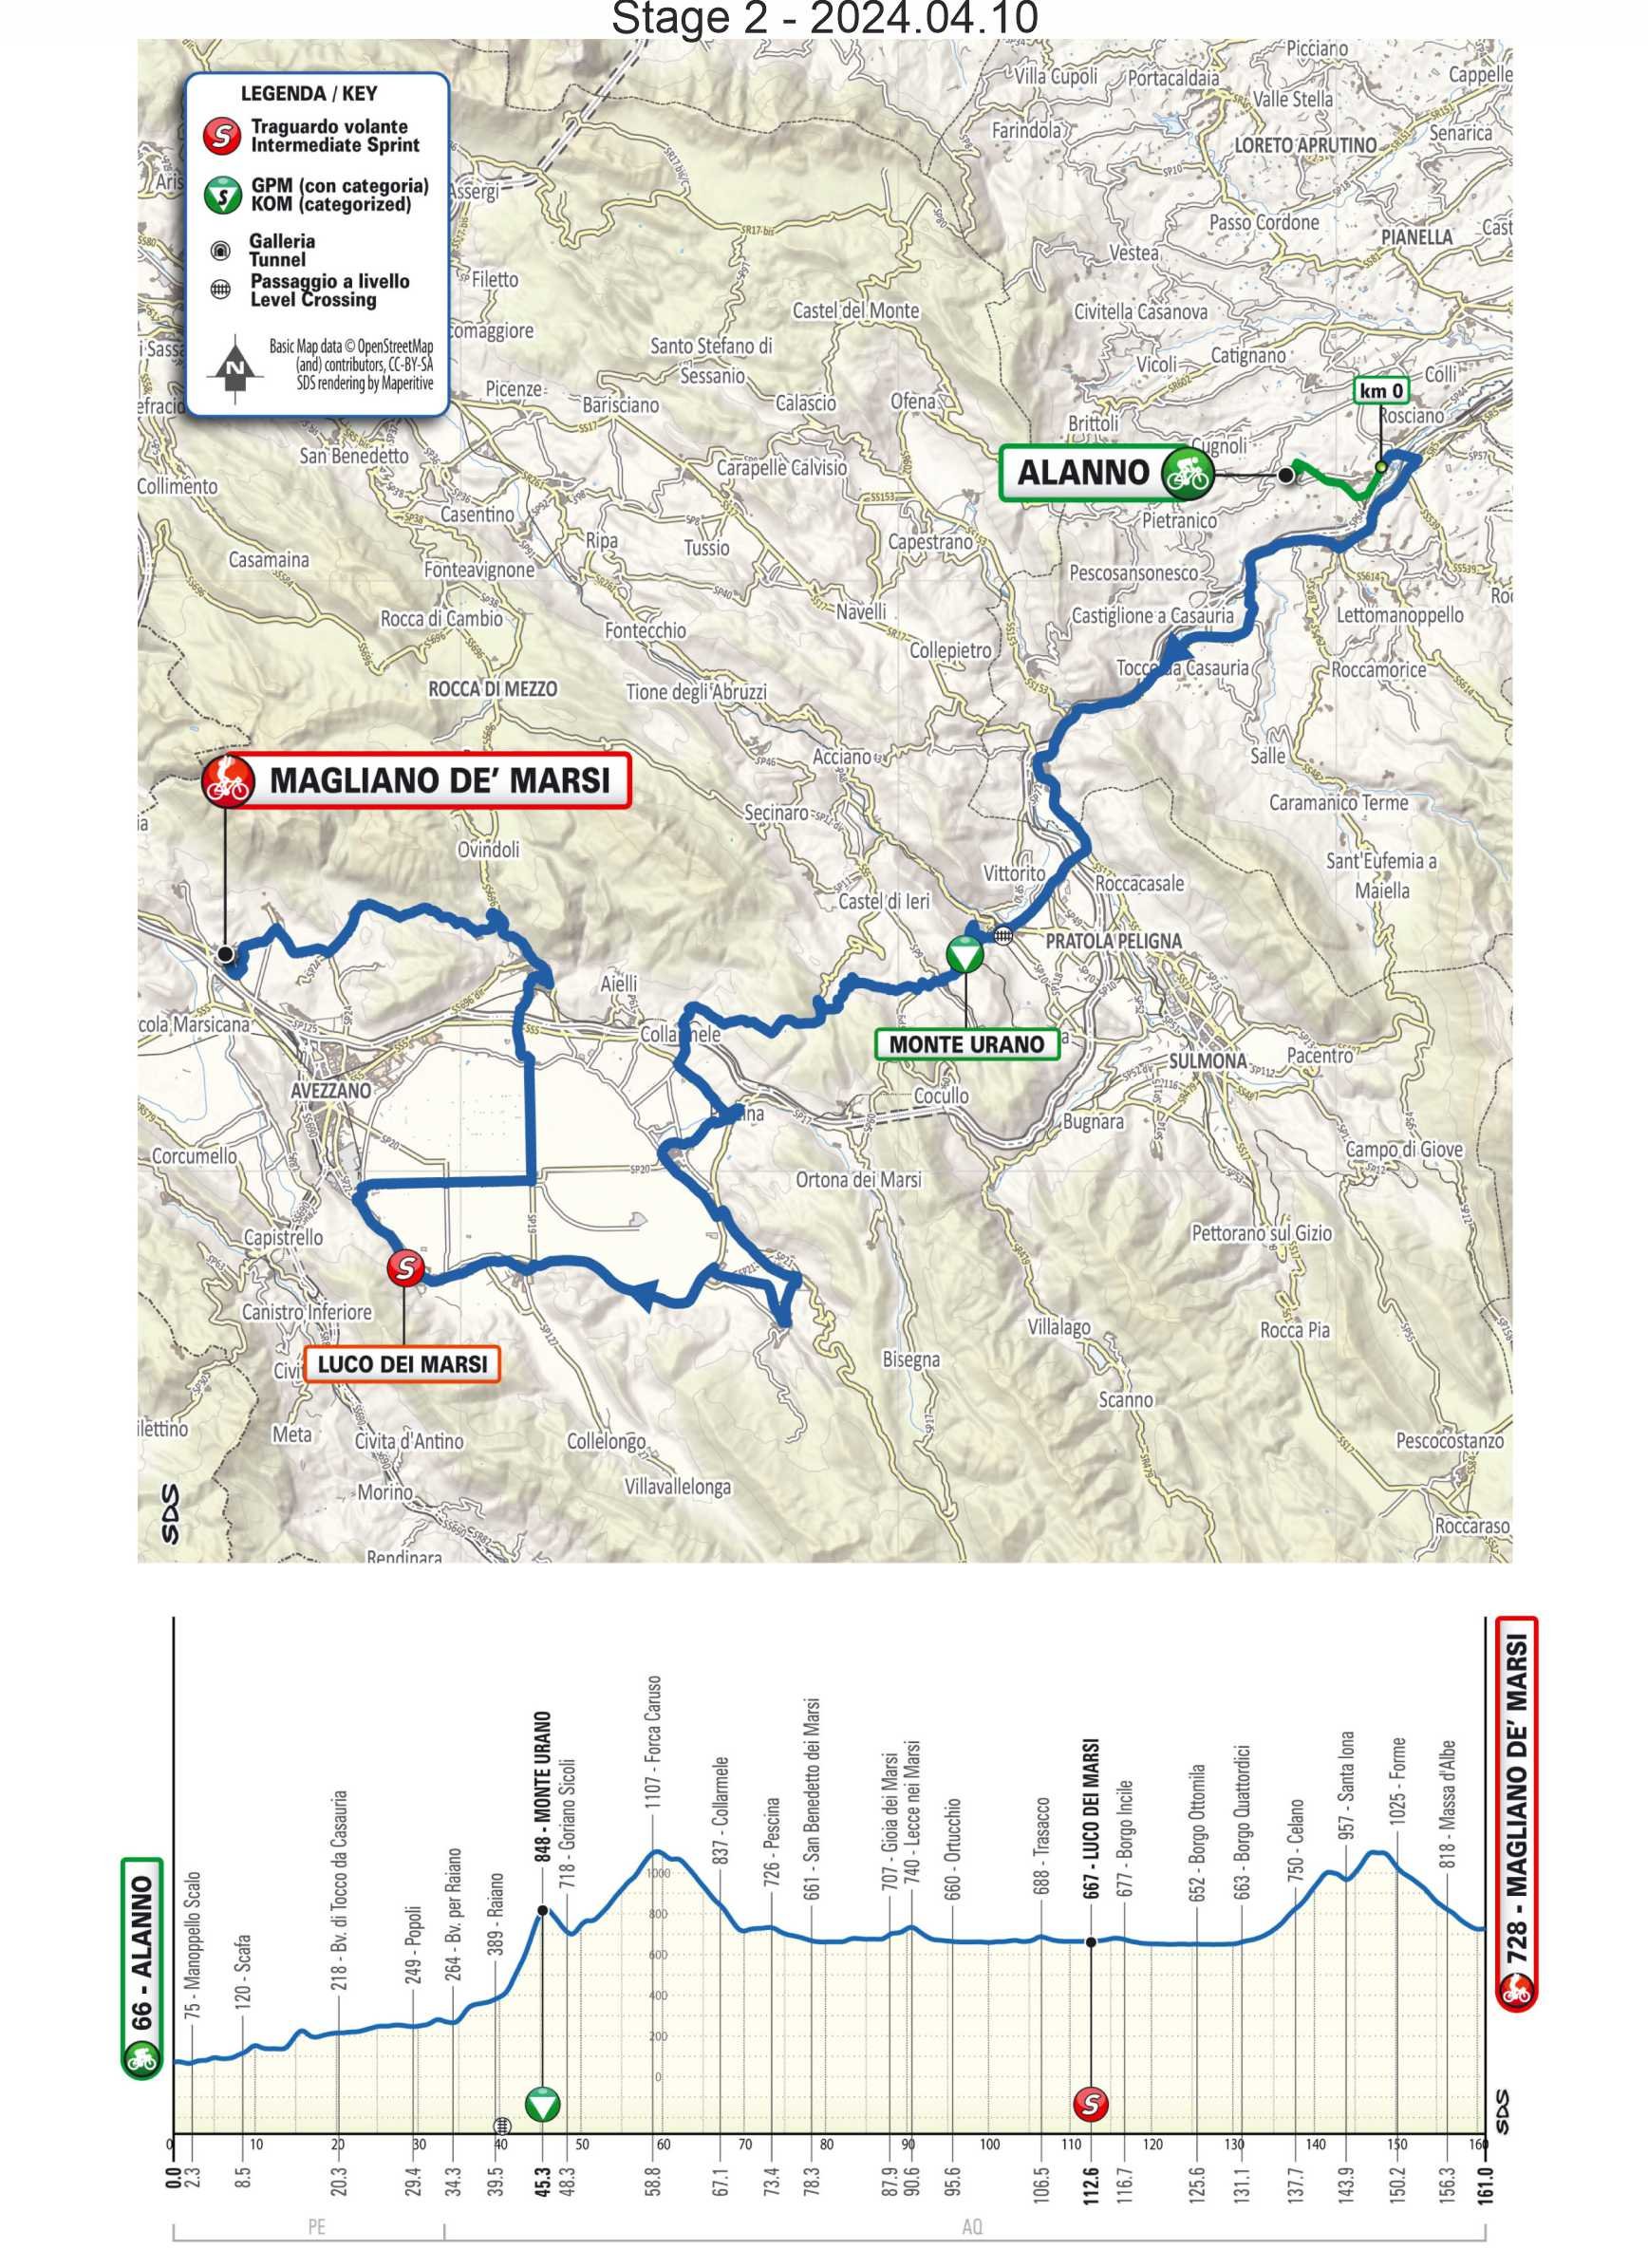 Giro d'Abruzzo_stage 2.jpg